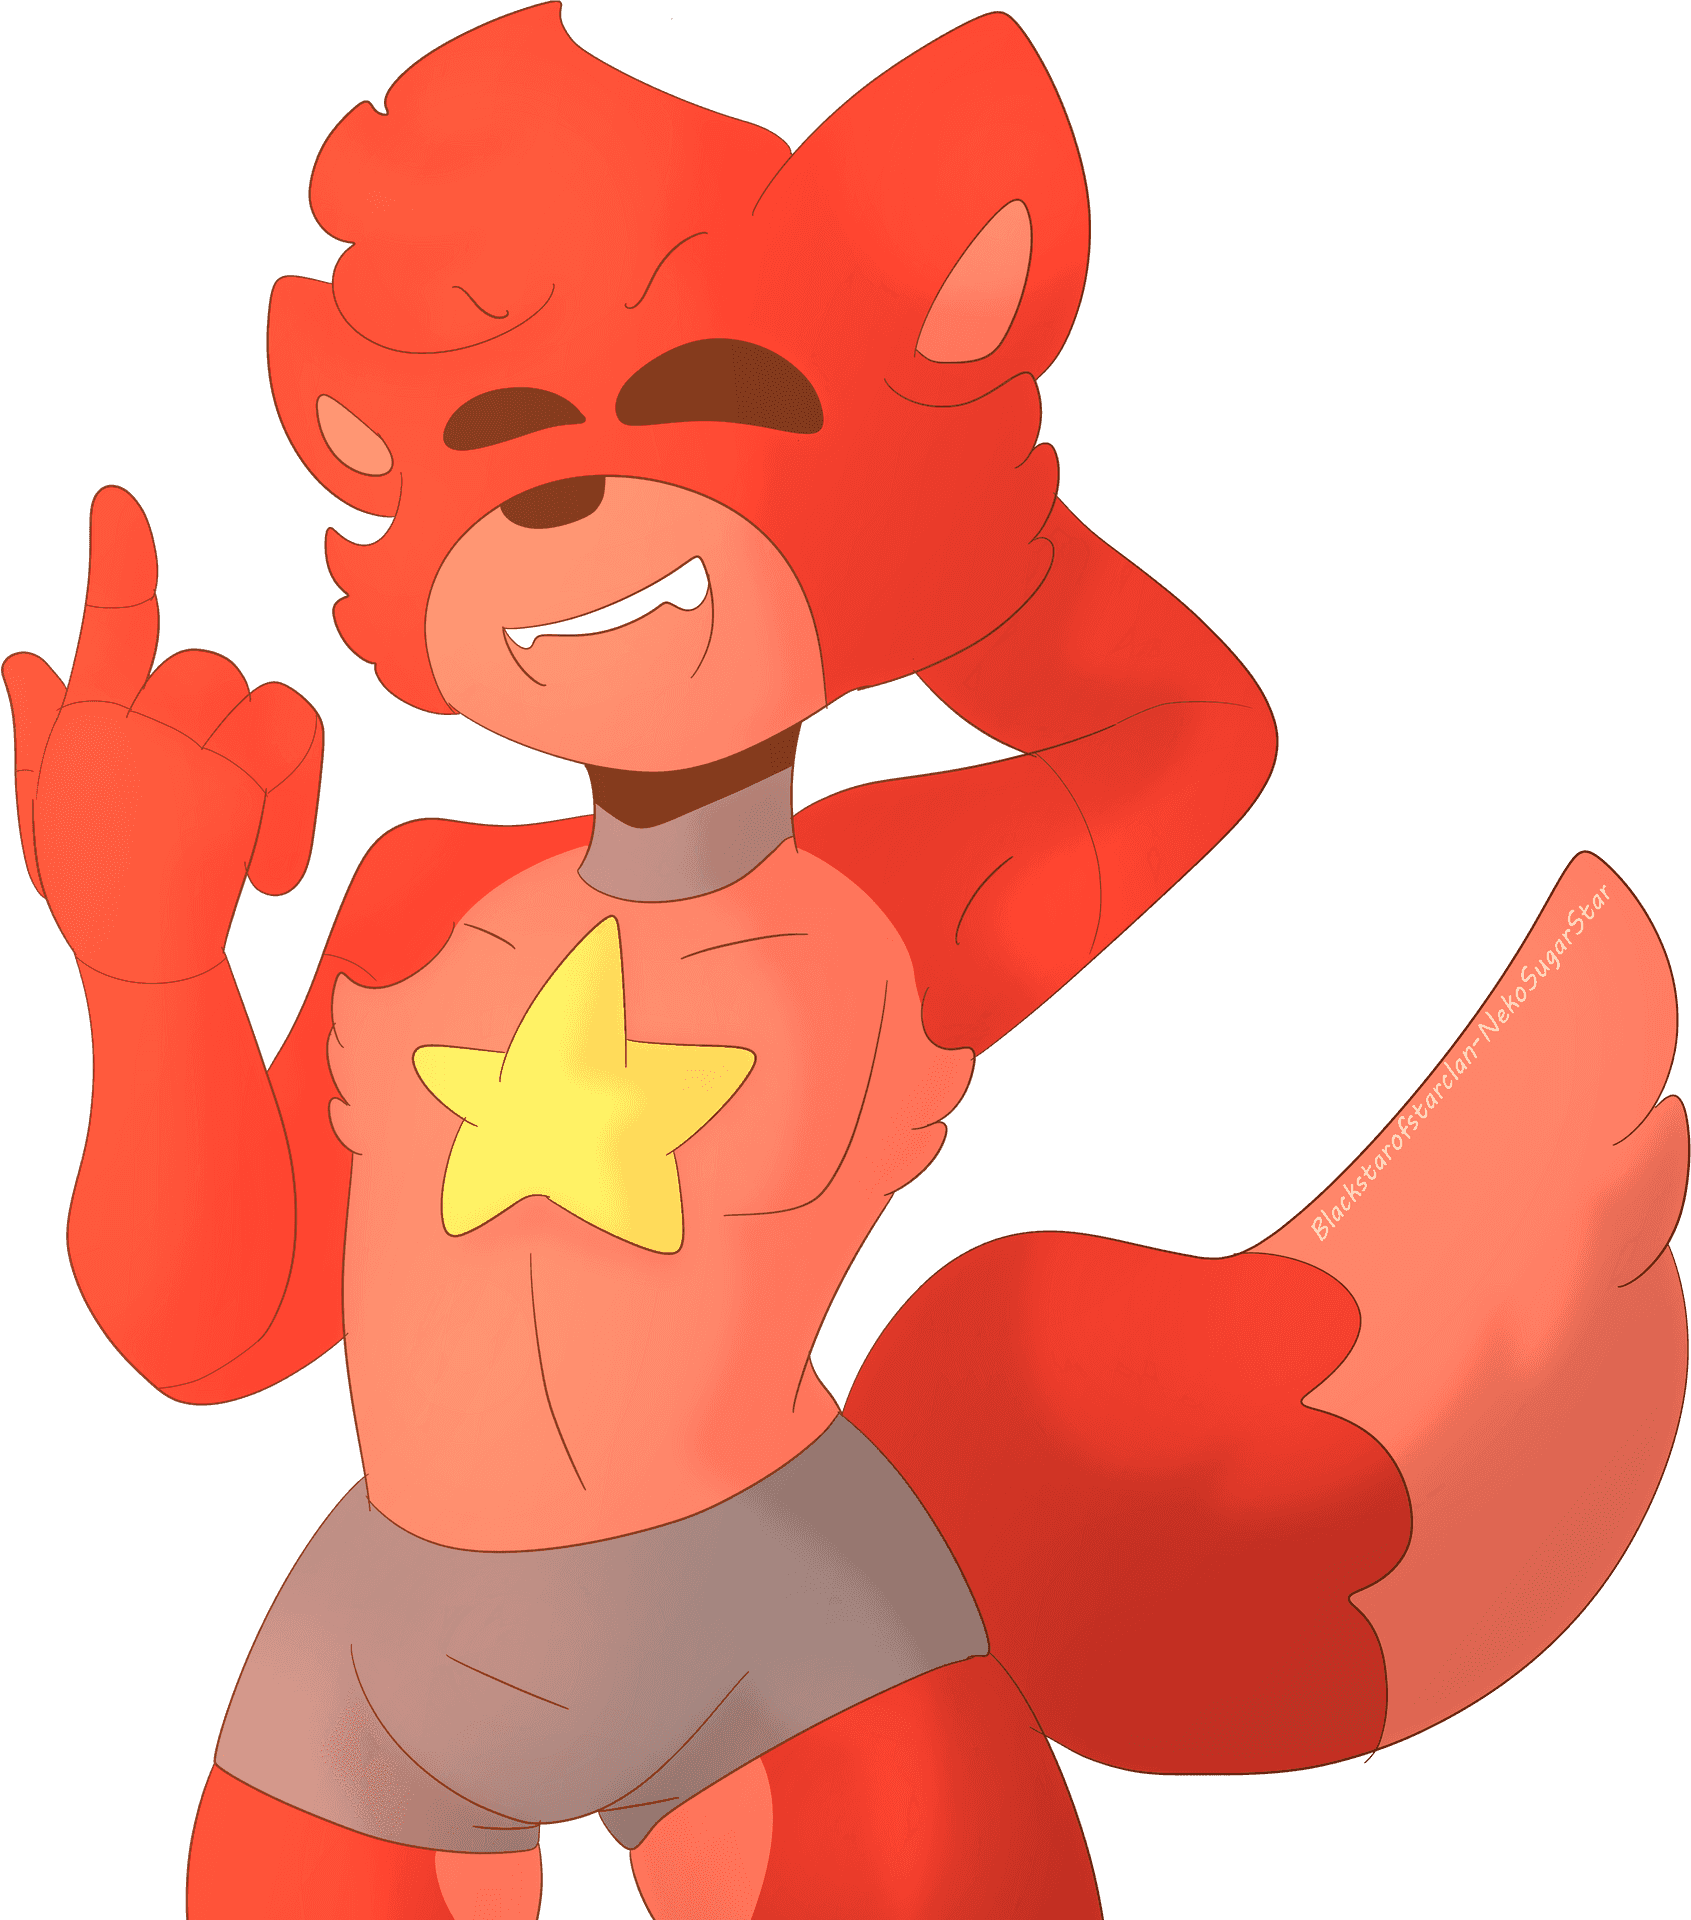 Animated Rockstar Fox Character PNG image